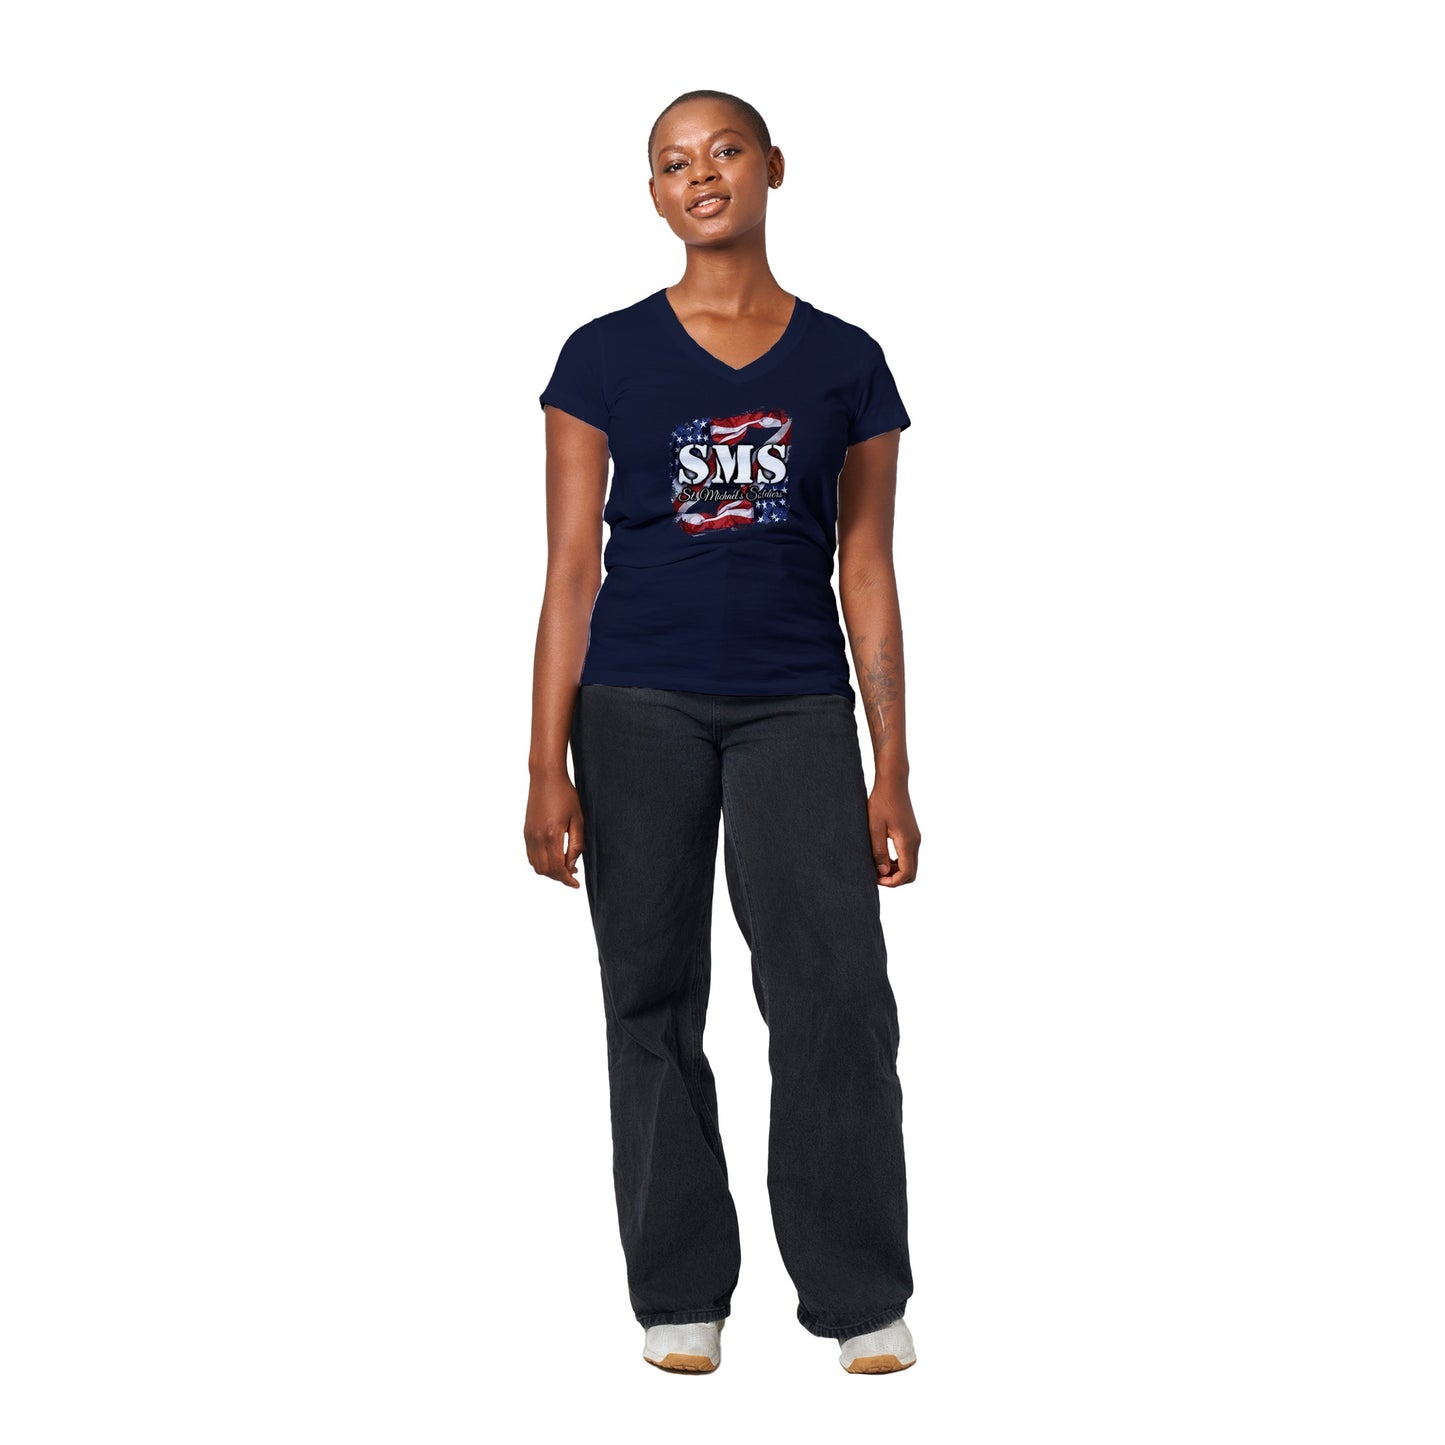 SMS (Flag1) - Premium Womens V-Neck T-shirt